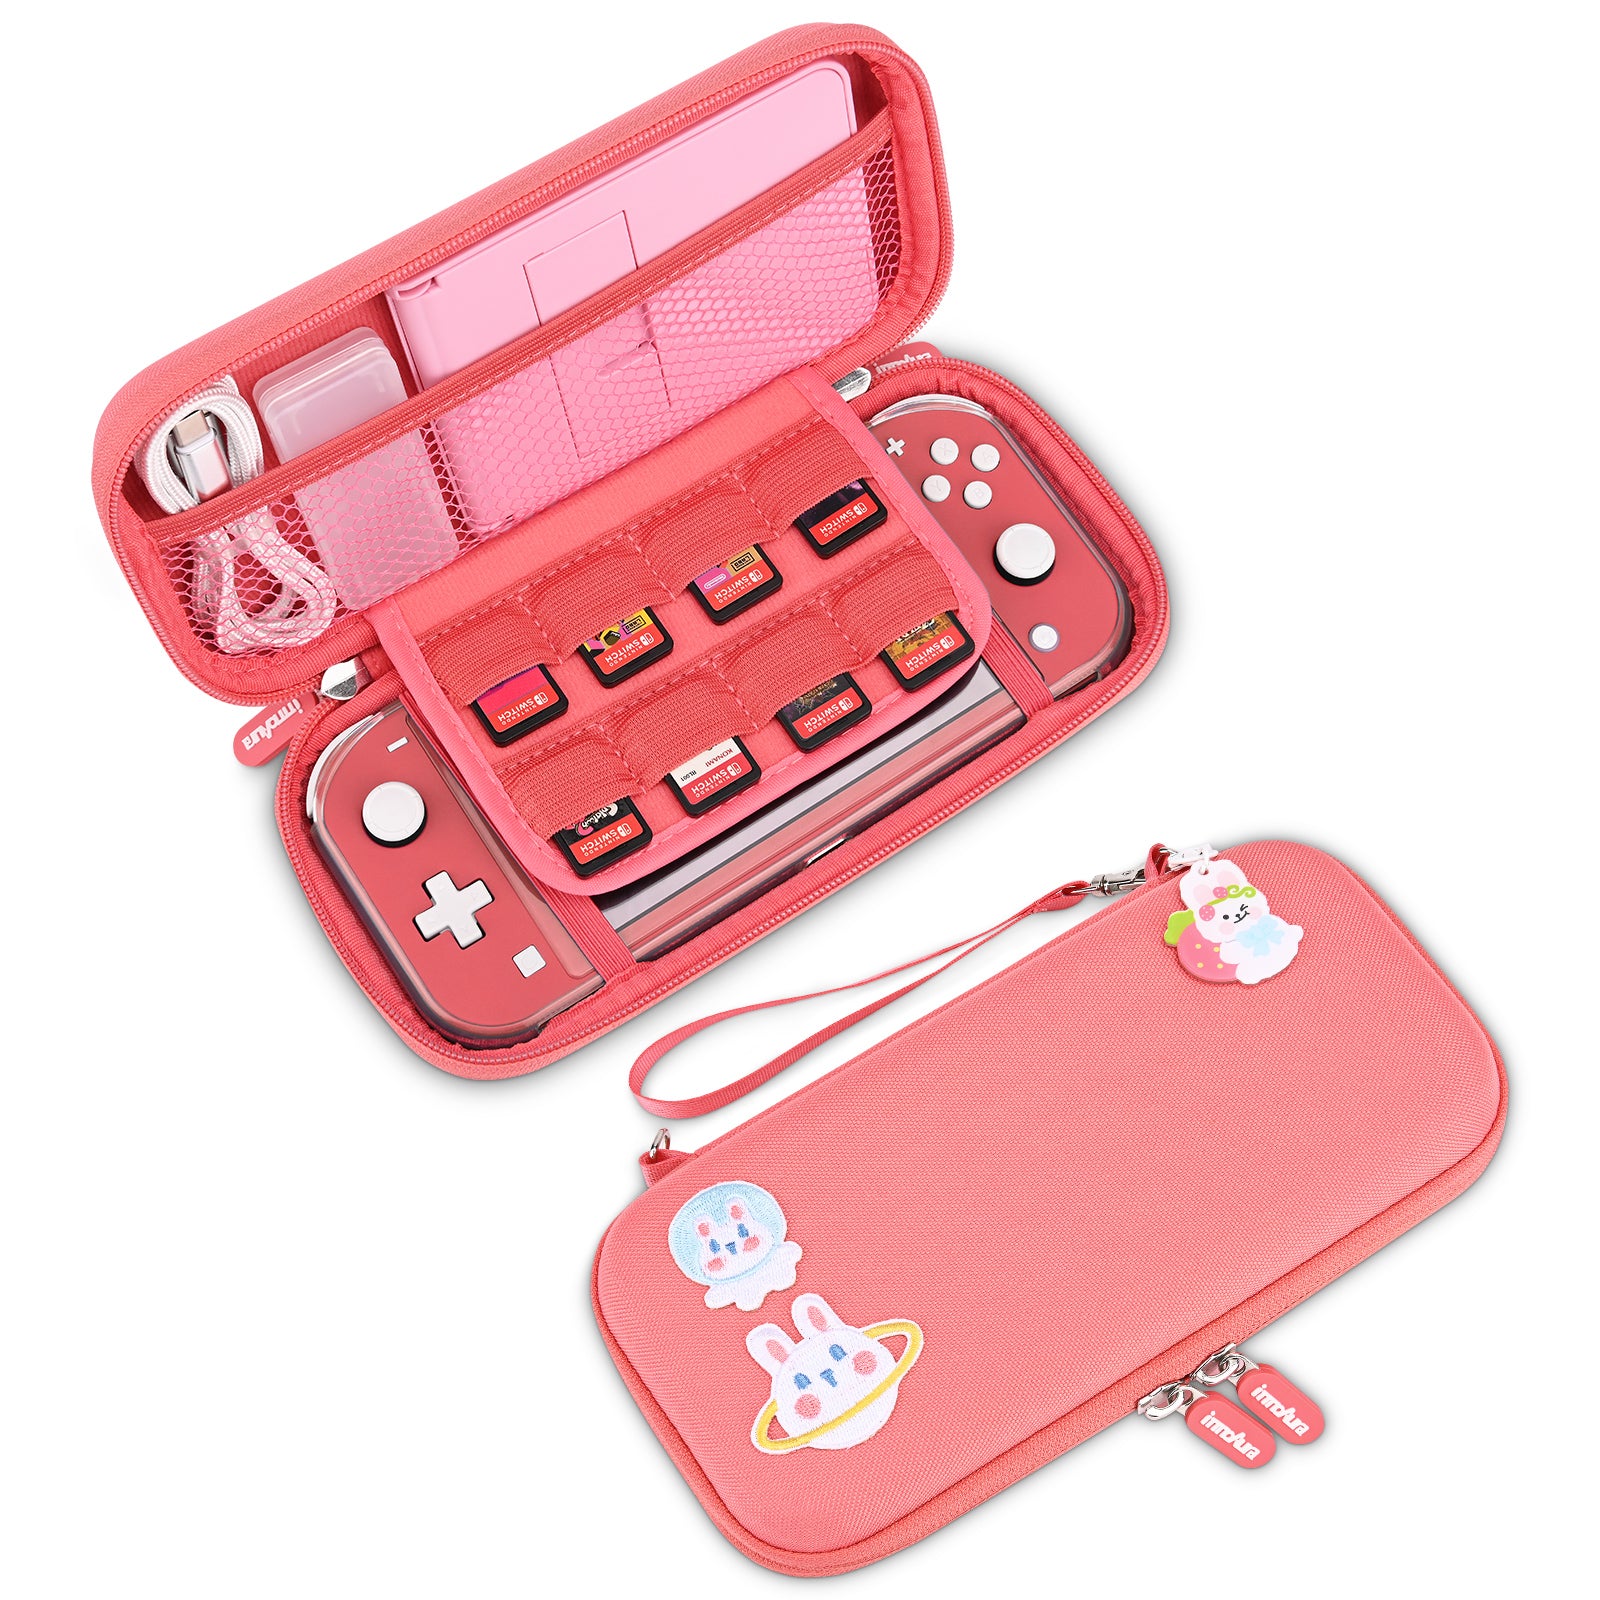 innoAura Lite Case 17 Accessories Nintendo Siwtch Lite Carry